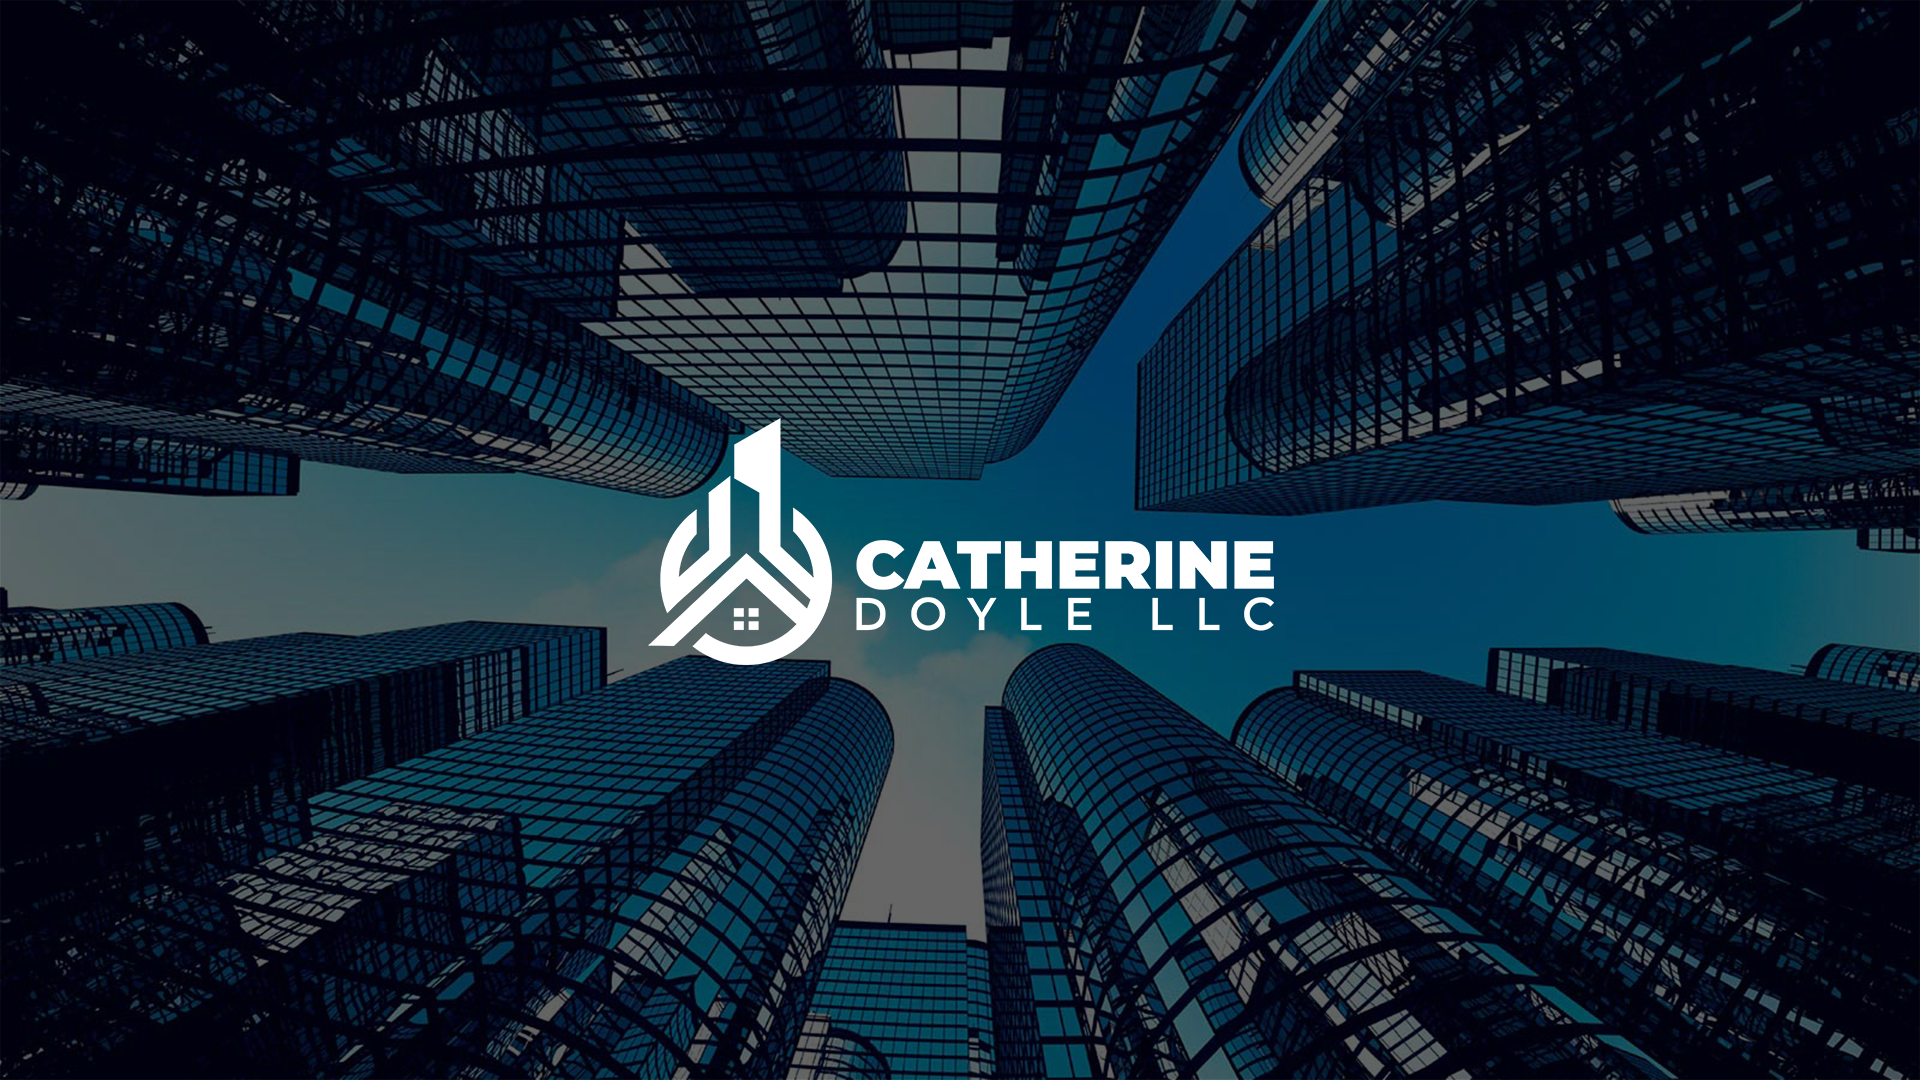 Catherine-Doyle-LLC_04